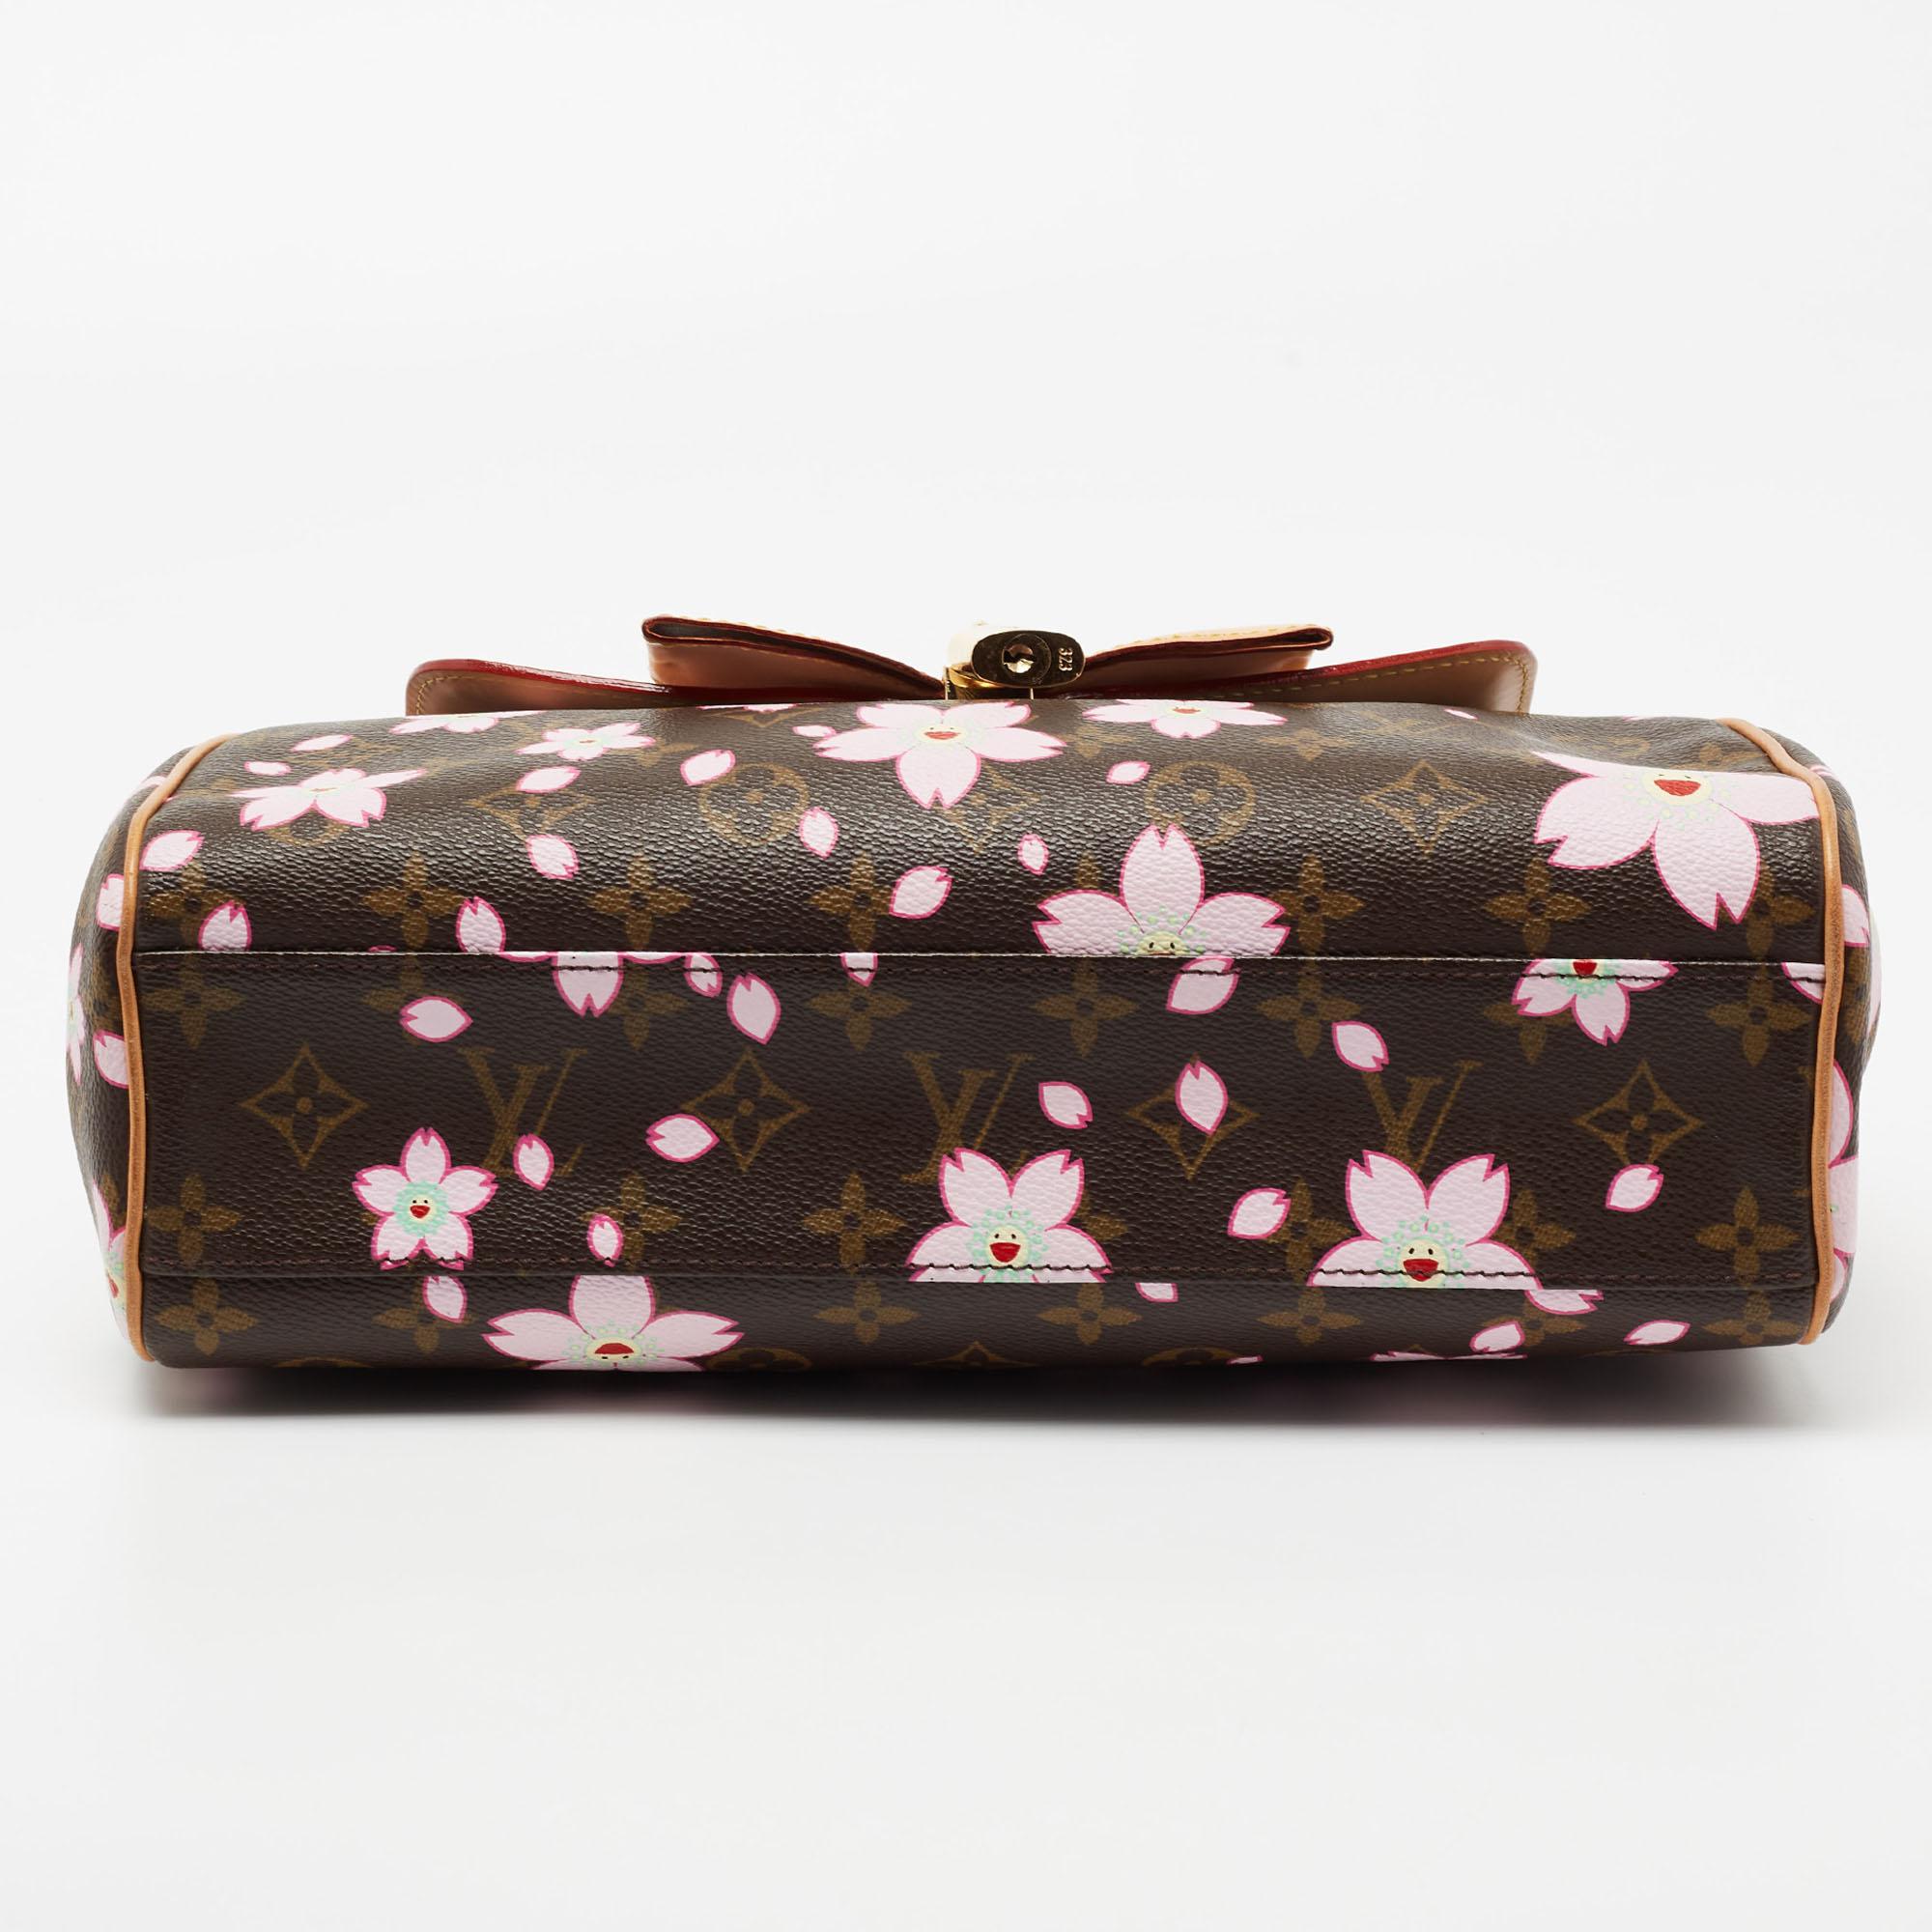 Women's Louis Vuitton Monogram Canvas Limited Edition Cherry Blossom Sac Retro PM Bag